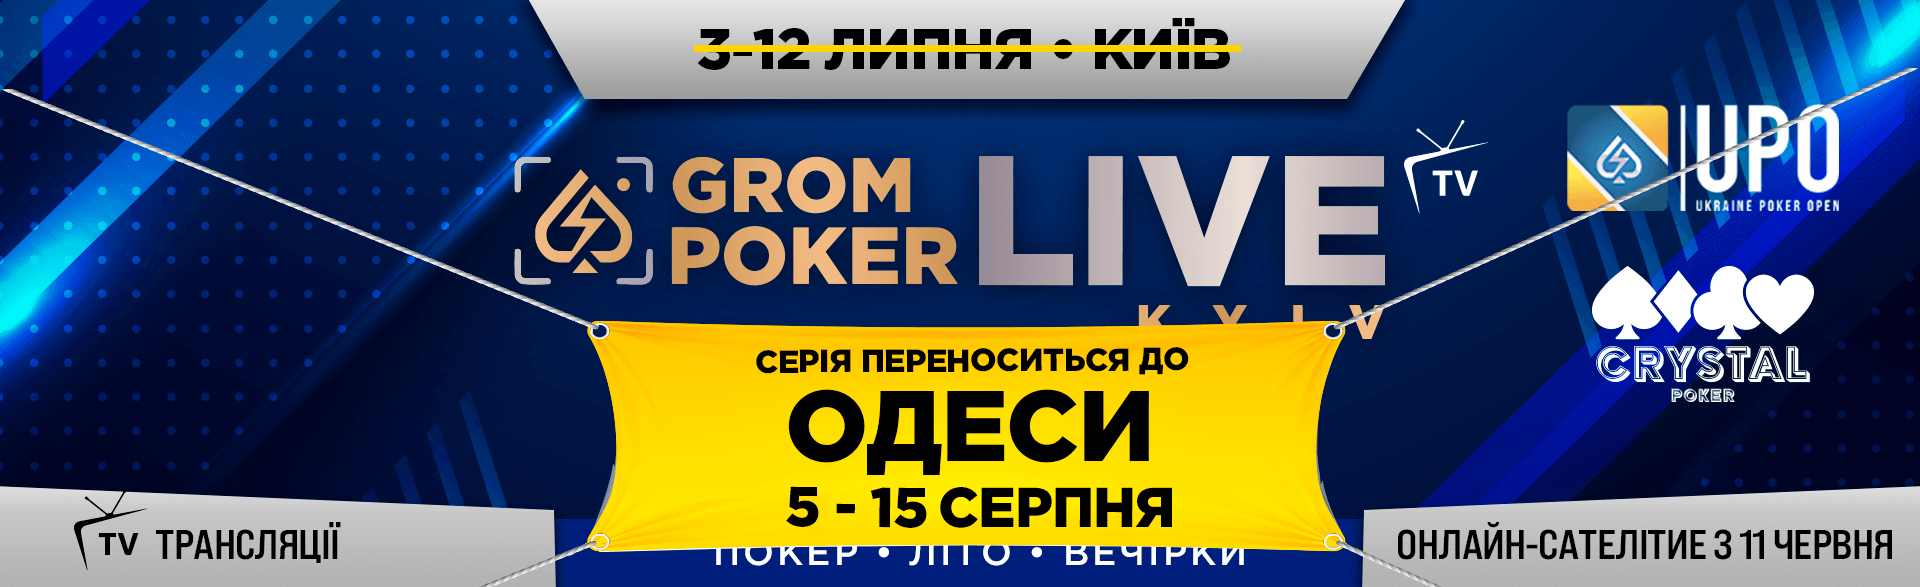 Grompoker Live Kyiv